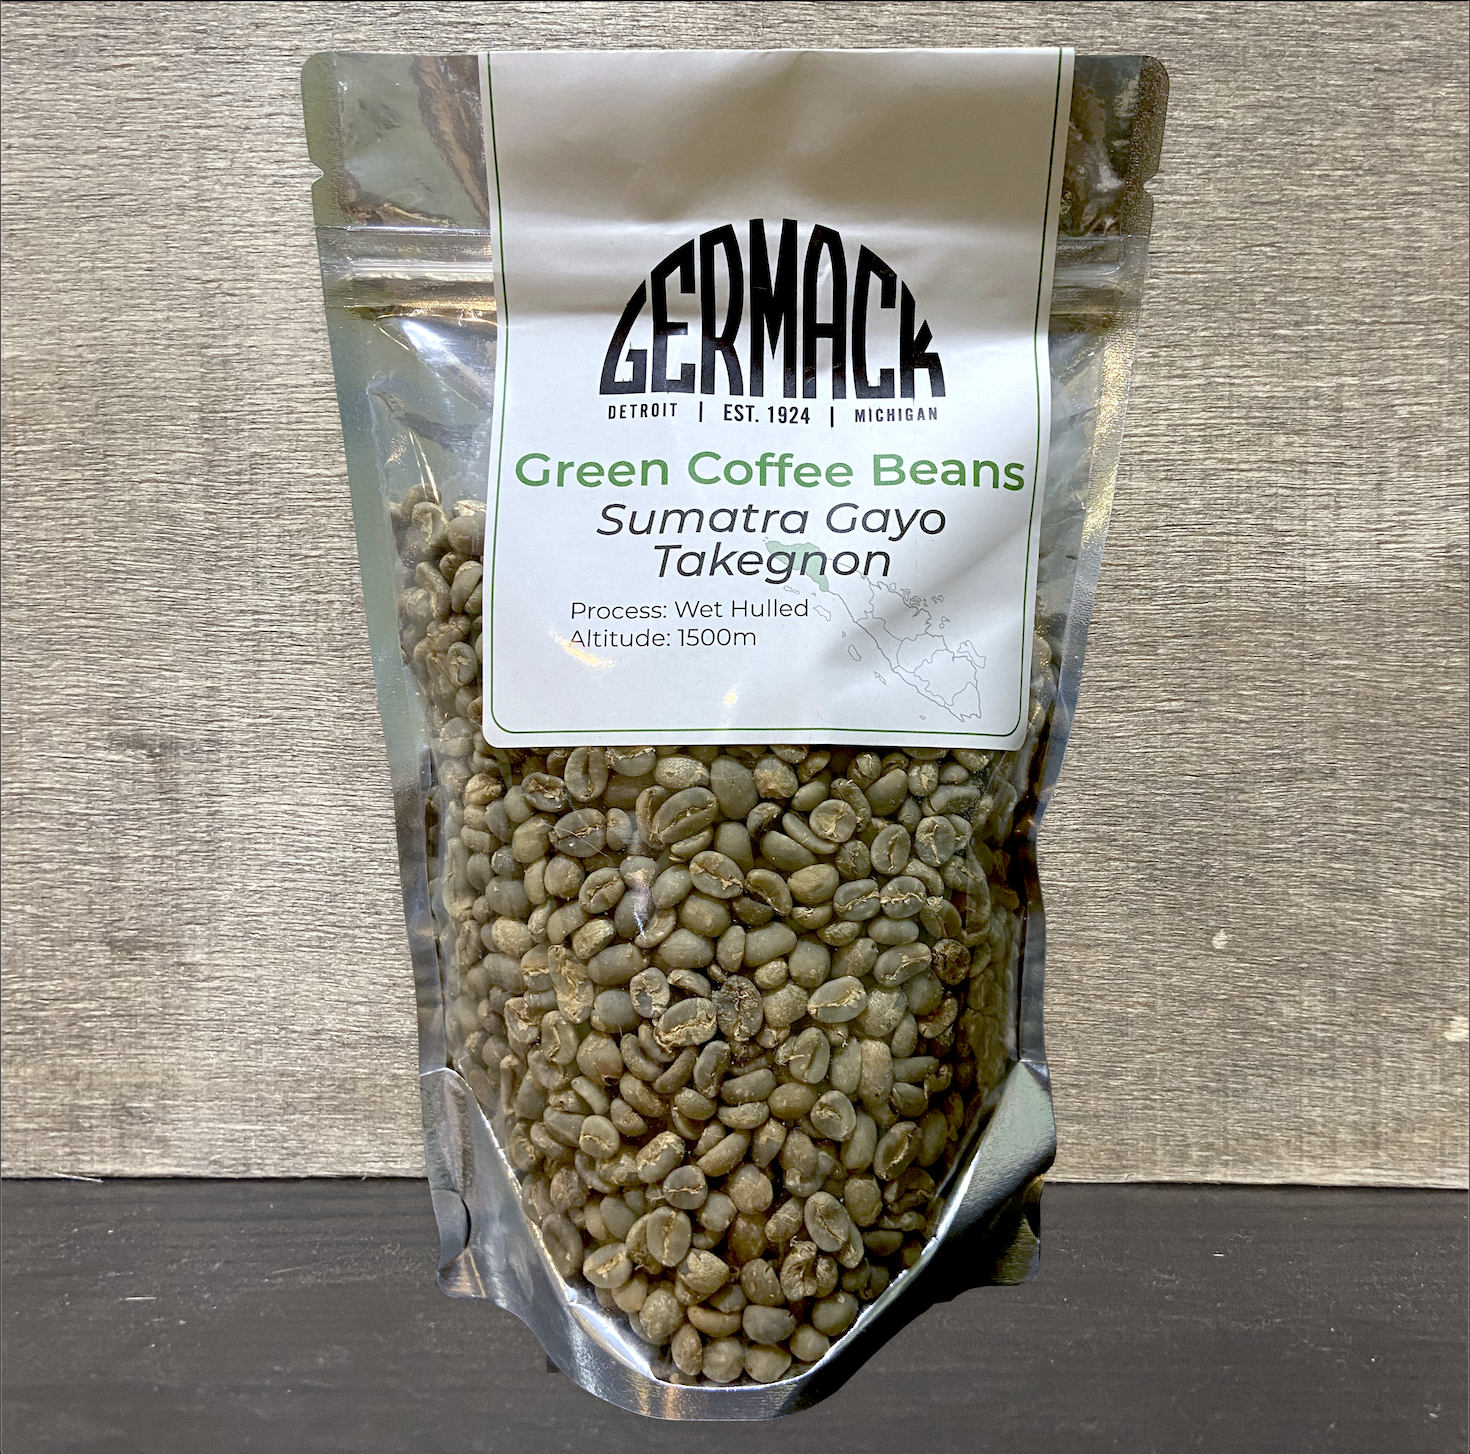 Picture Germack Green Coffee Beans (1 lb) - Sumatra Gayo Takegnon